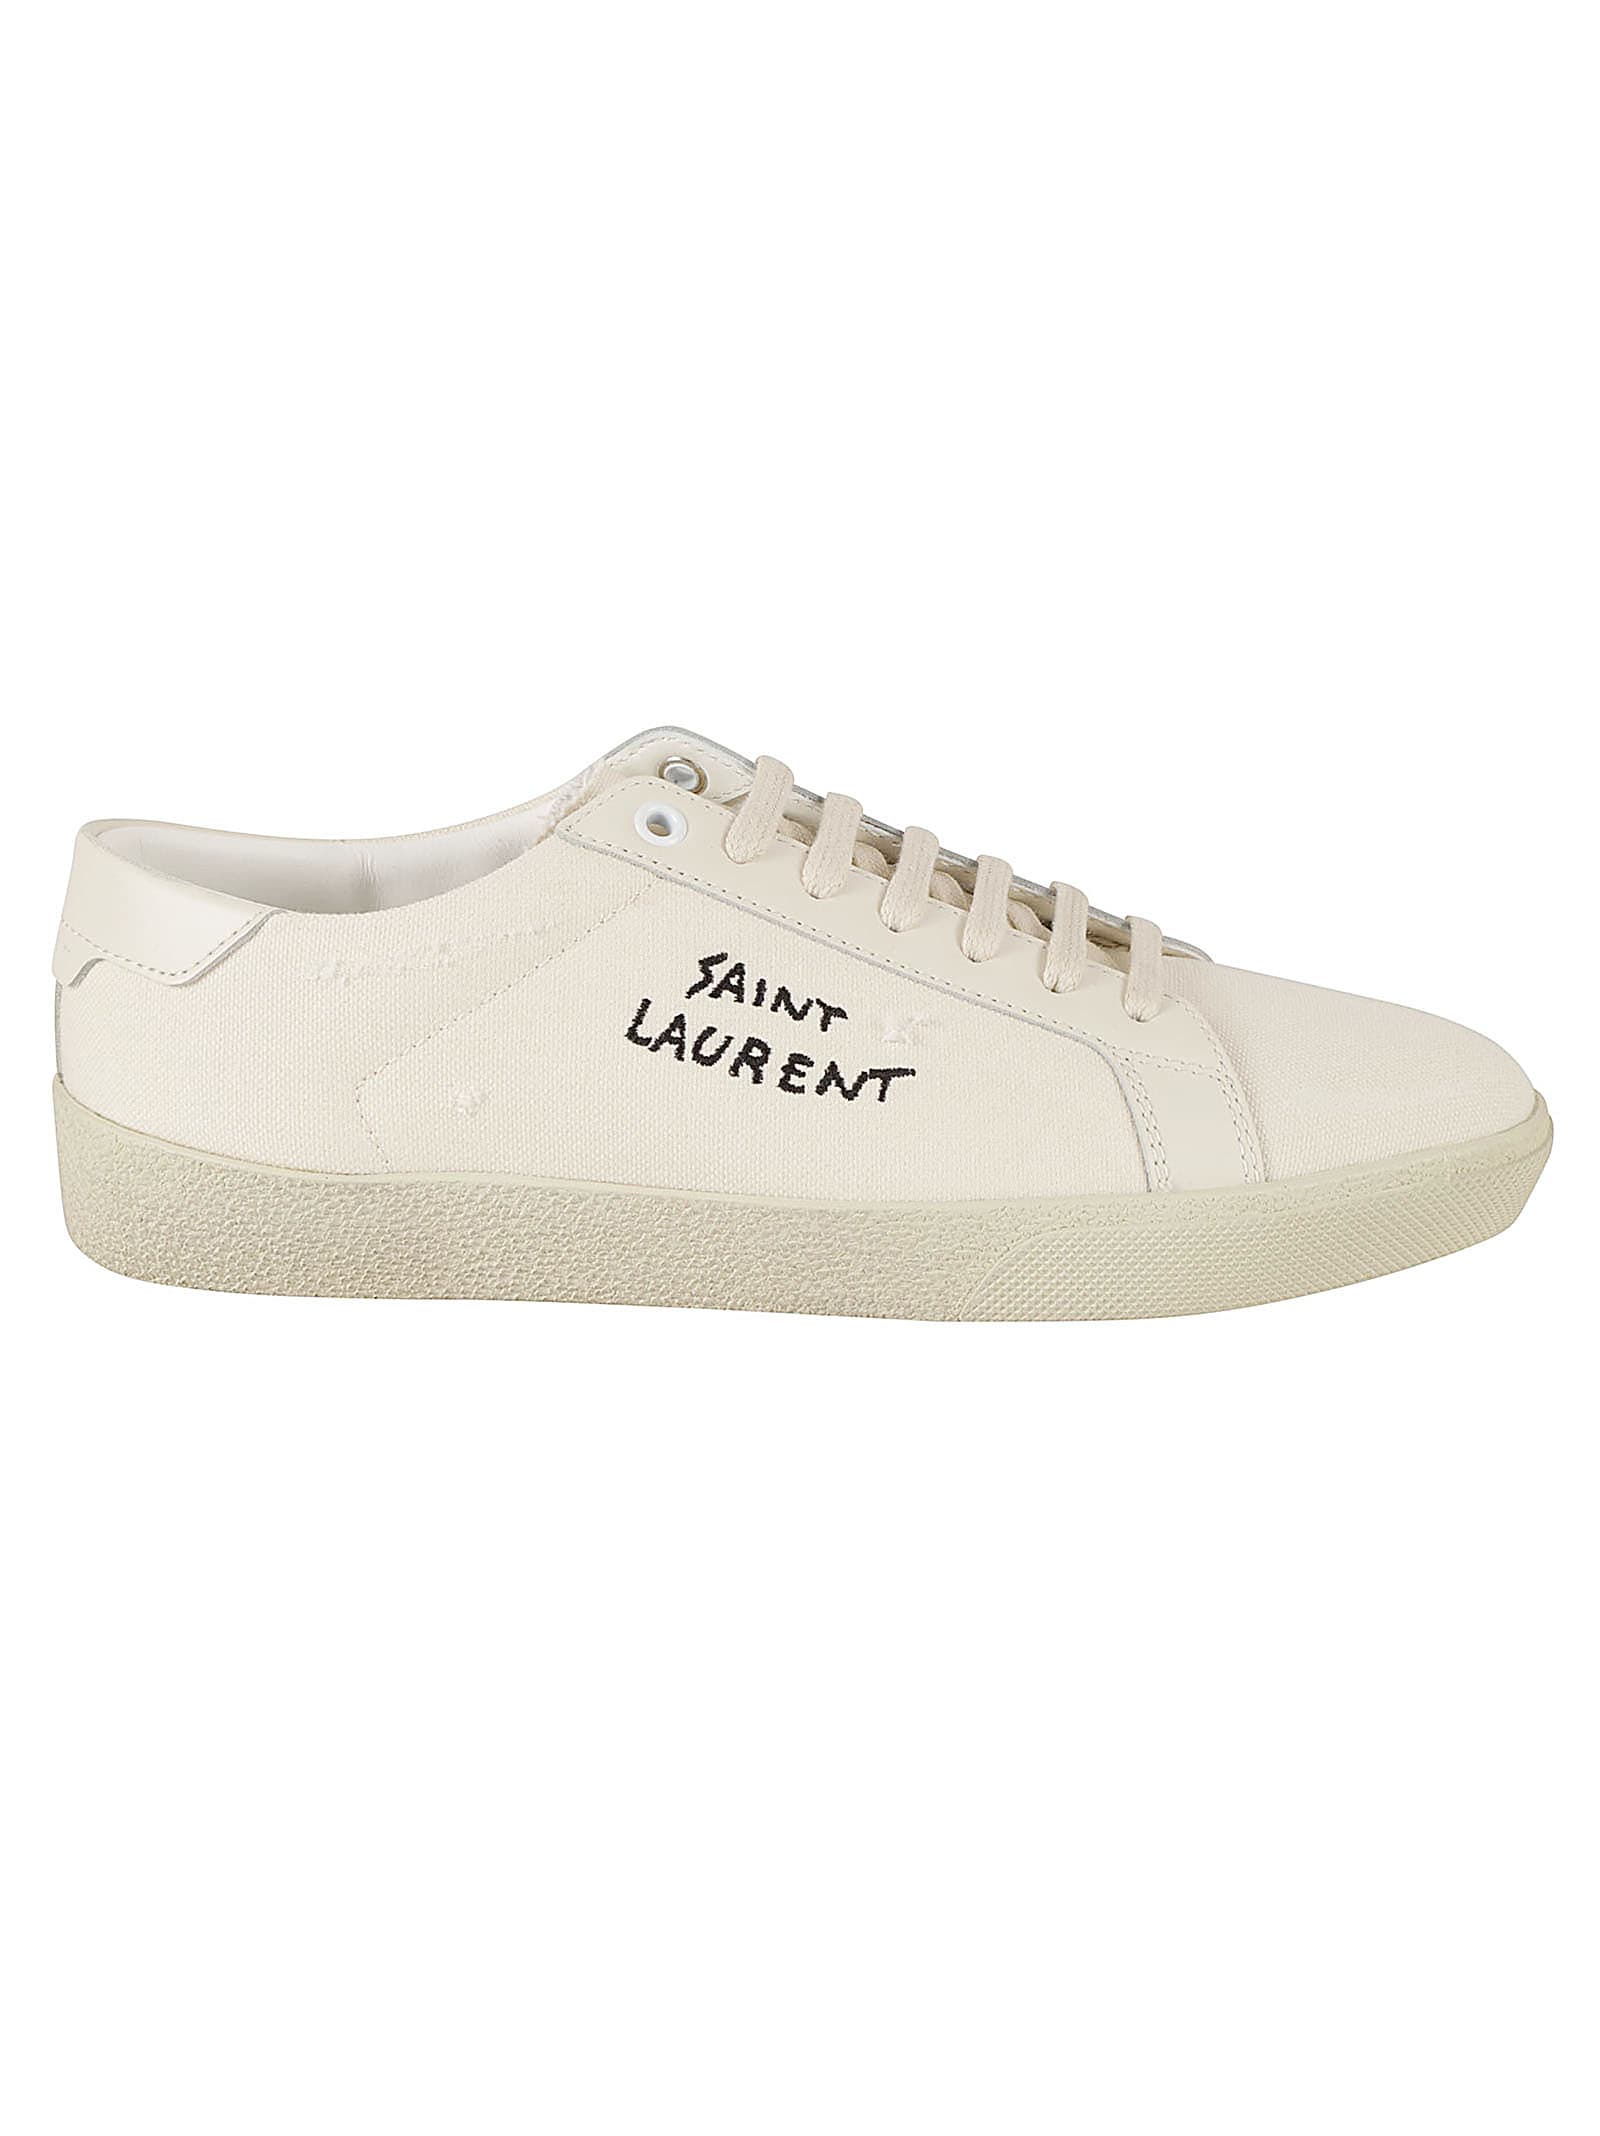 Saint Laurent Sl06 Signature Low Top Sneakers In Panna